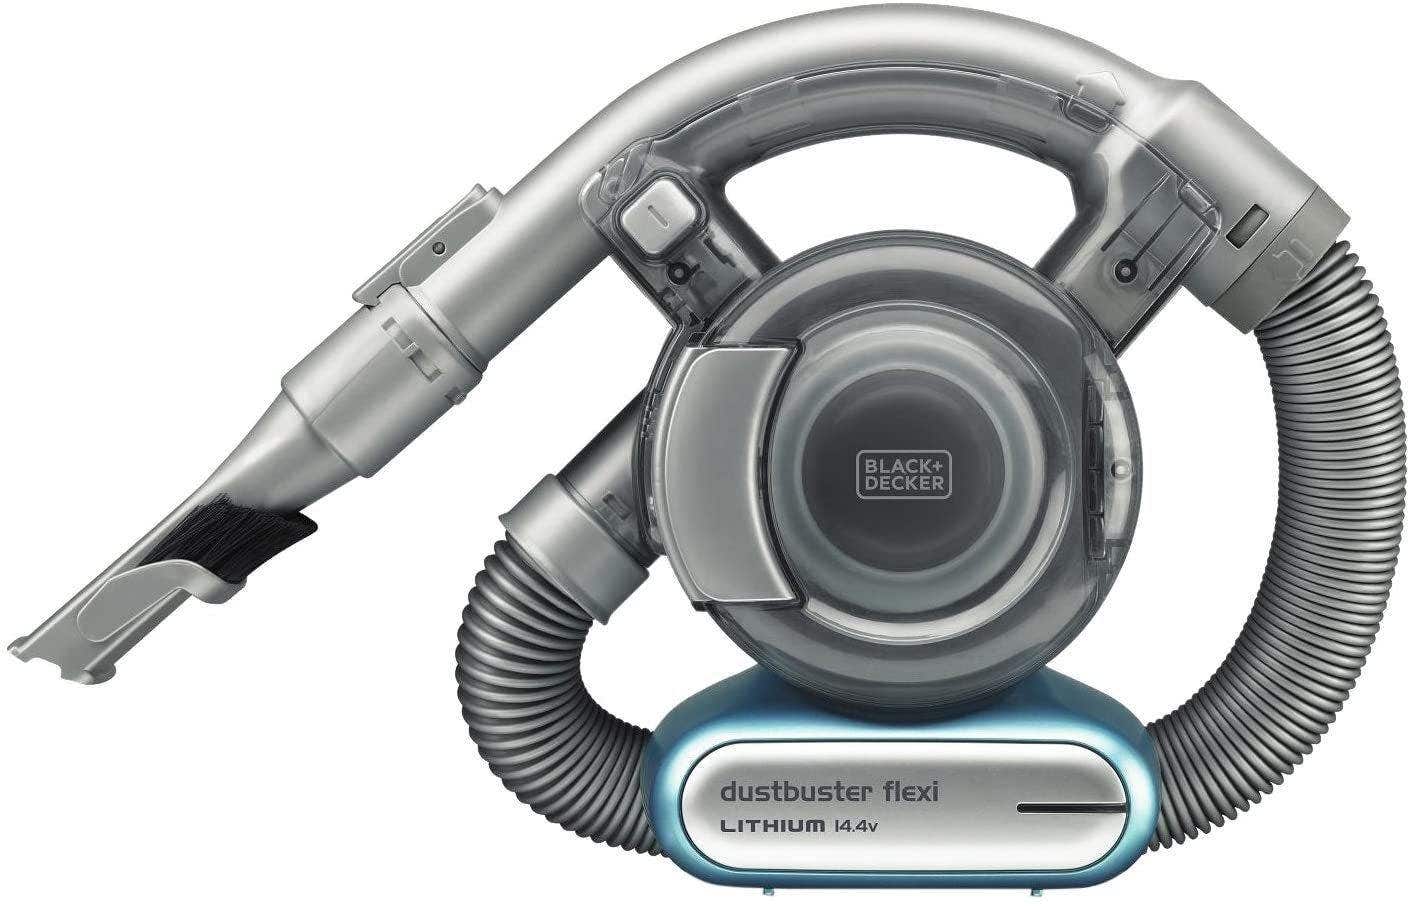 Black & Decker 14.4V 1.5Ah Li-Ion Flexi Auto Dustbuster Handheld Cordless Vacuum with Pet Tool for Home & Car, Blue-Grey - PD1420LP-GB